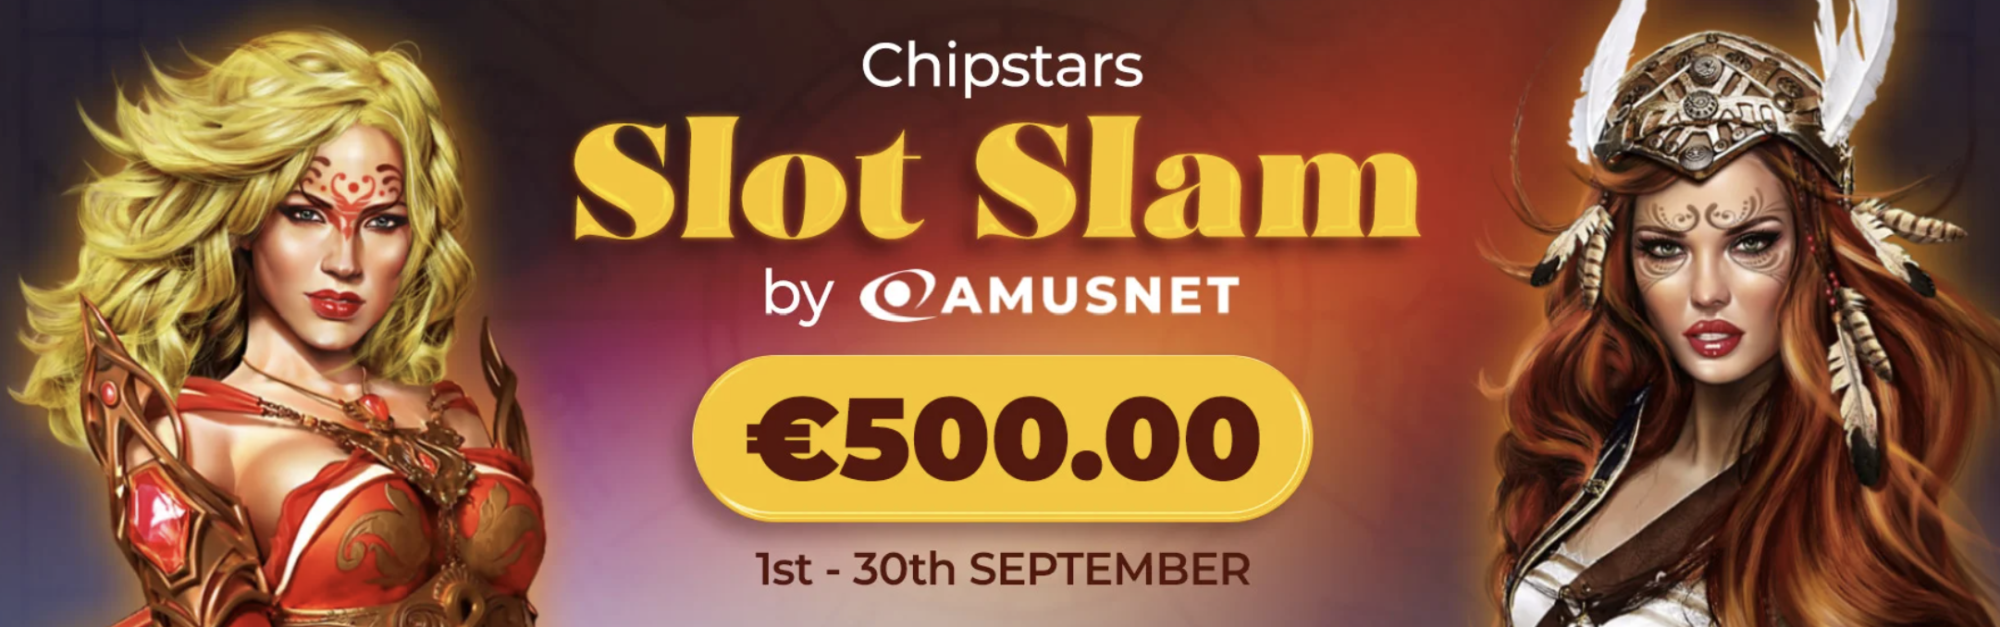 Chip stars casino not on gamstop